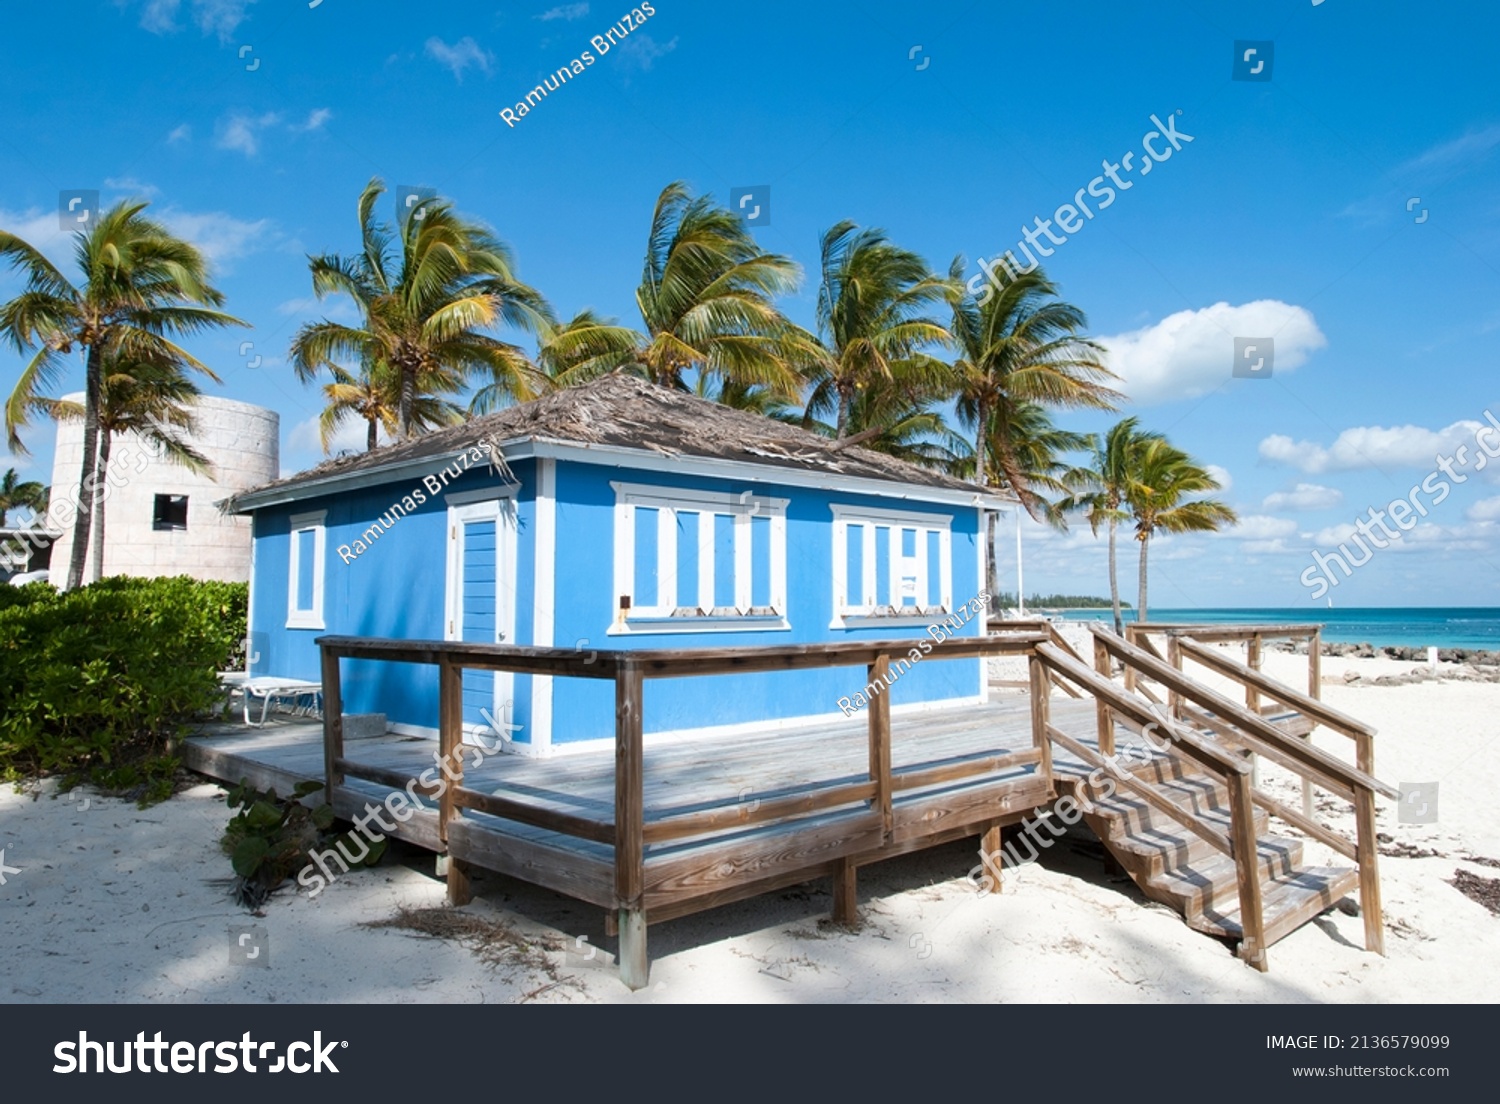 1,027 Freeport bahamas Images, Stock Photos & Vectors | Shutterstock